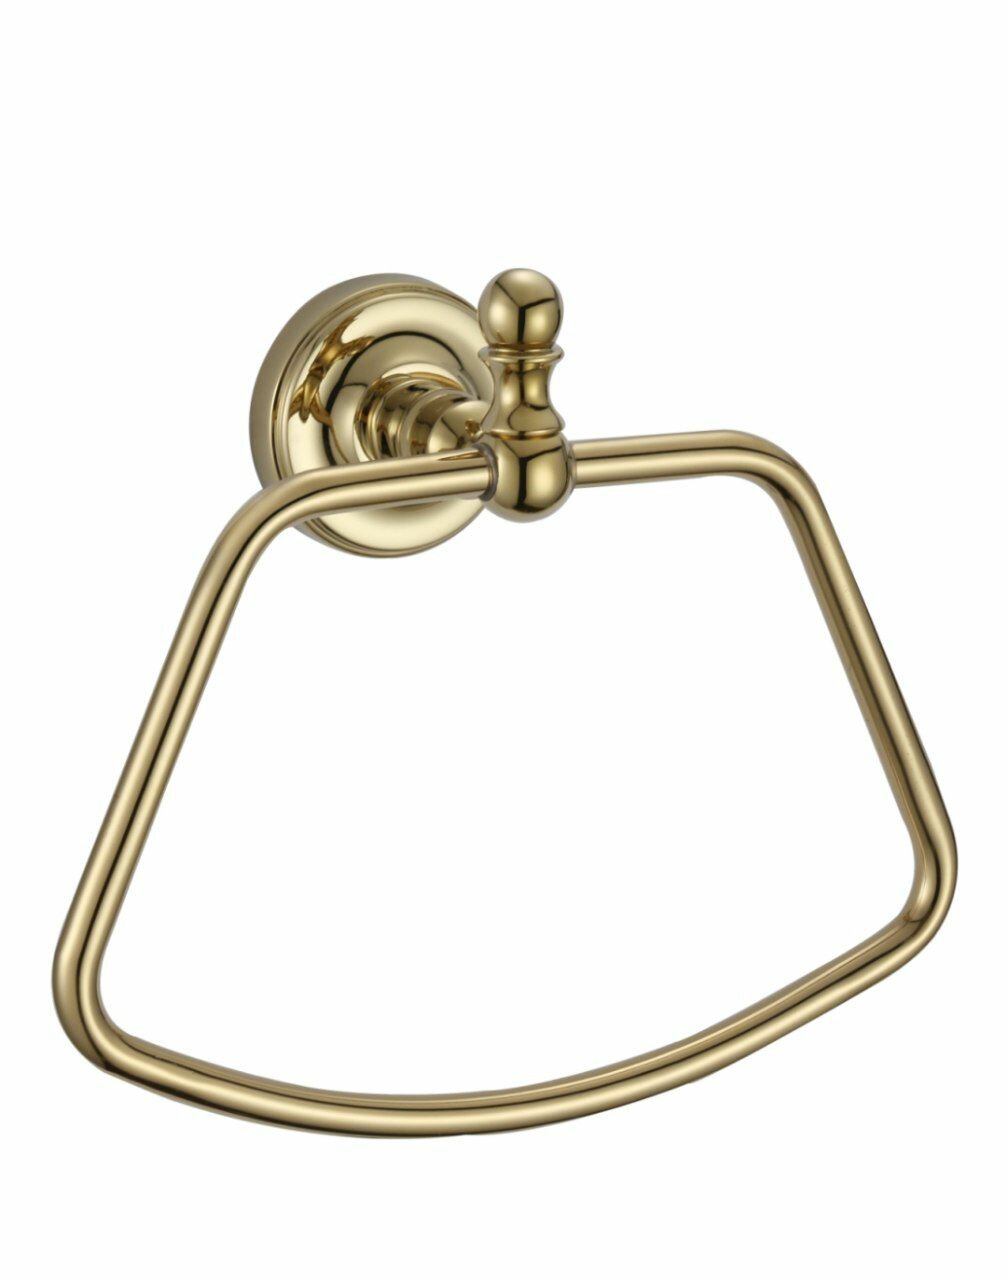 Ganzer Полотенцедержатель(кольцо) Ganzer GZ31040-Е золотистый